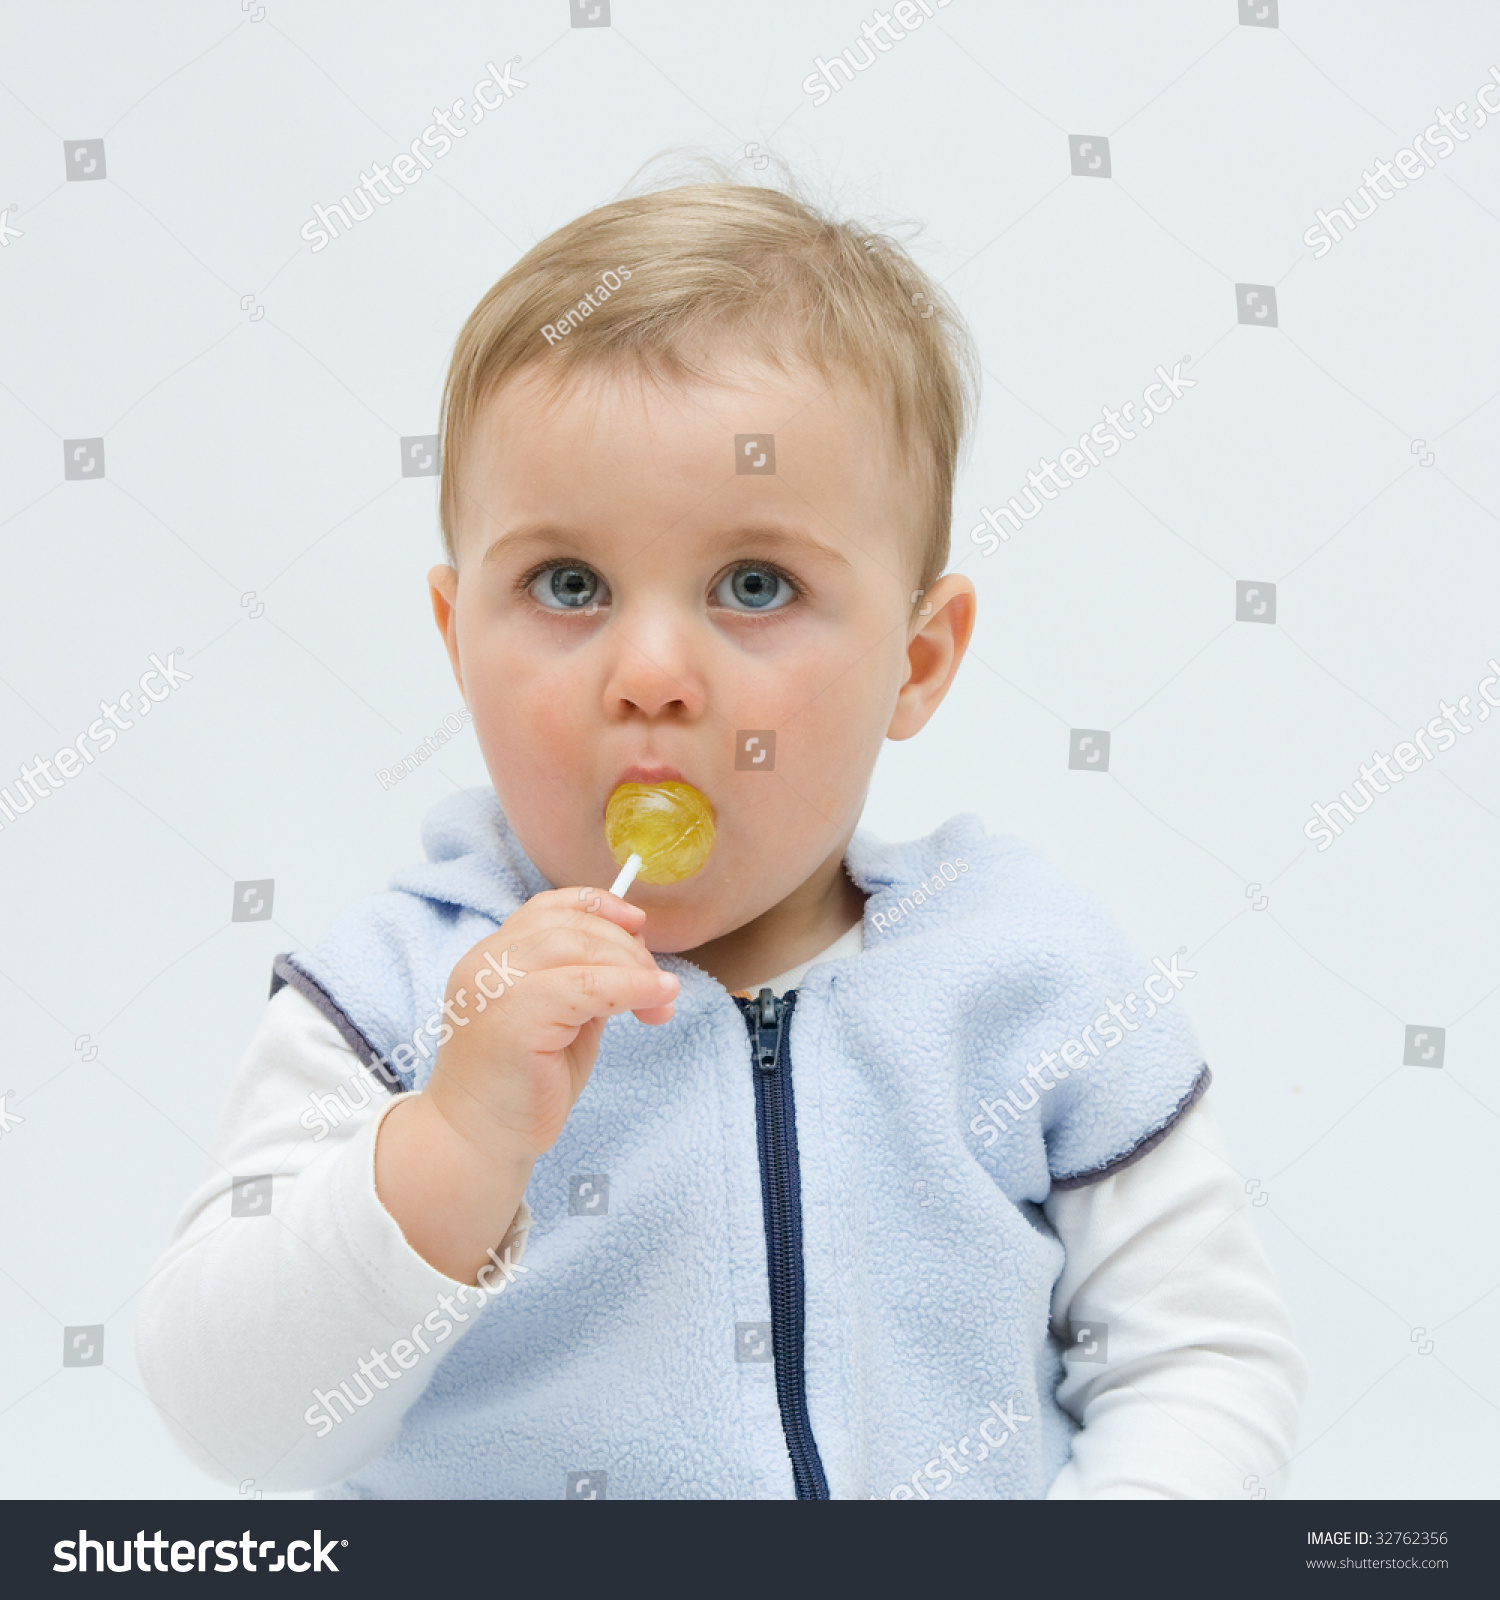 Cute Little Boy Eating Lollipop Stock Photo (Royalty Free) 32762356 ...